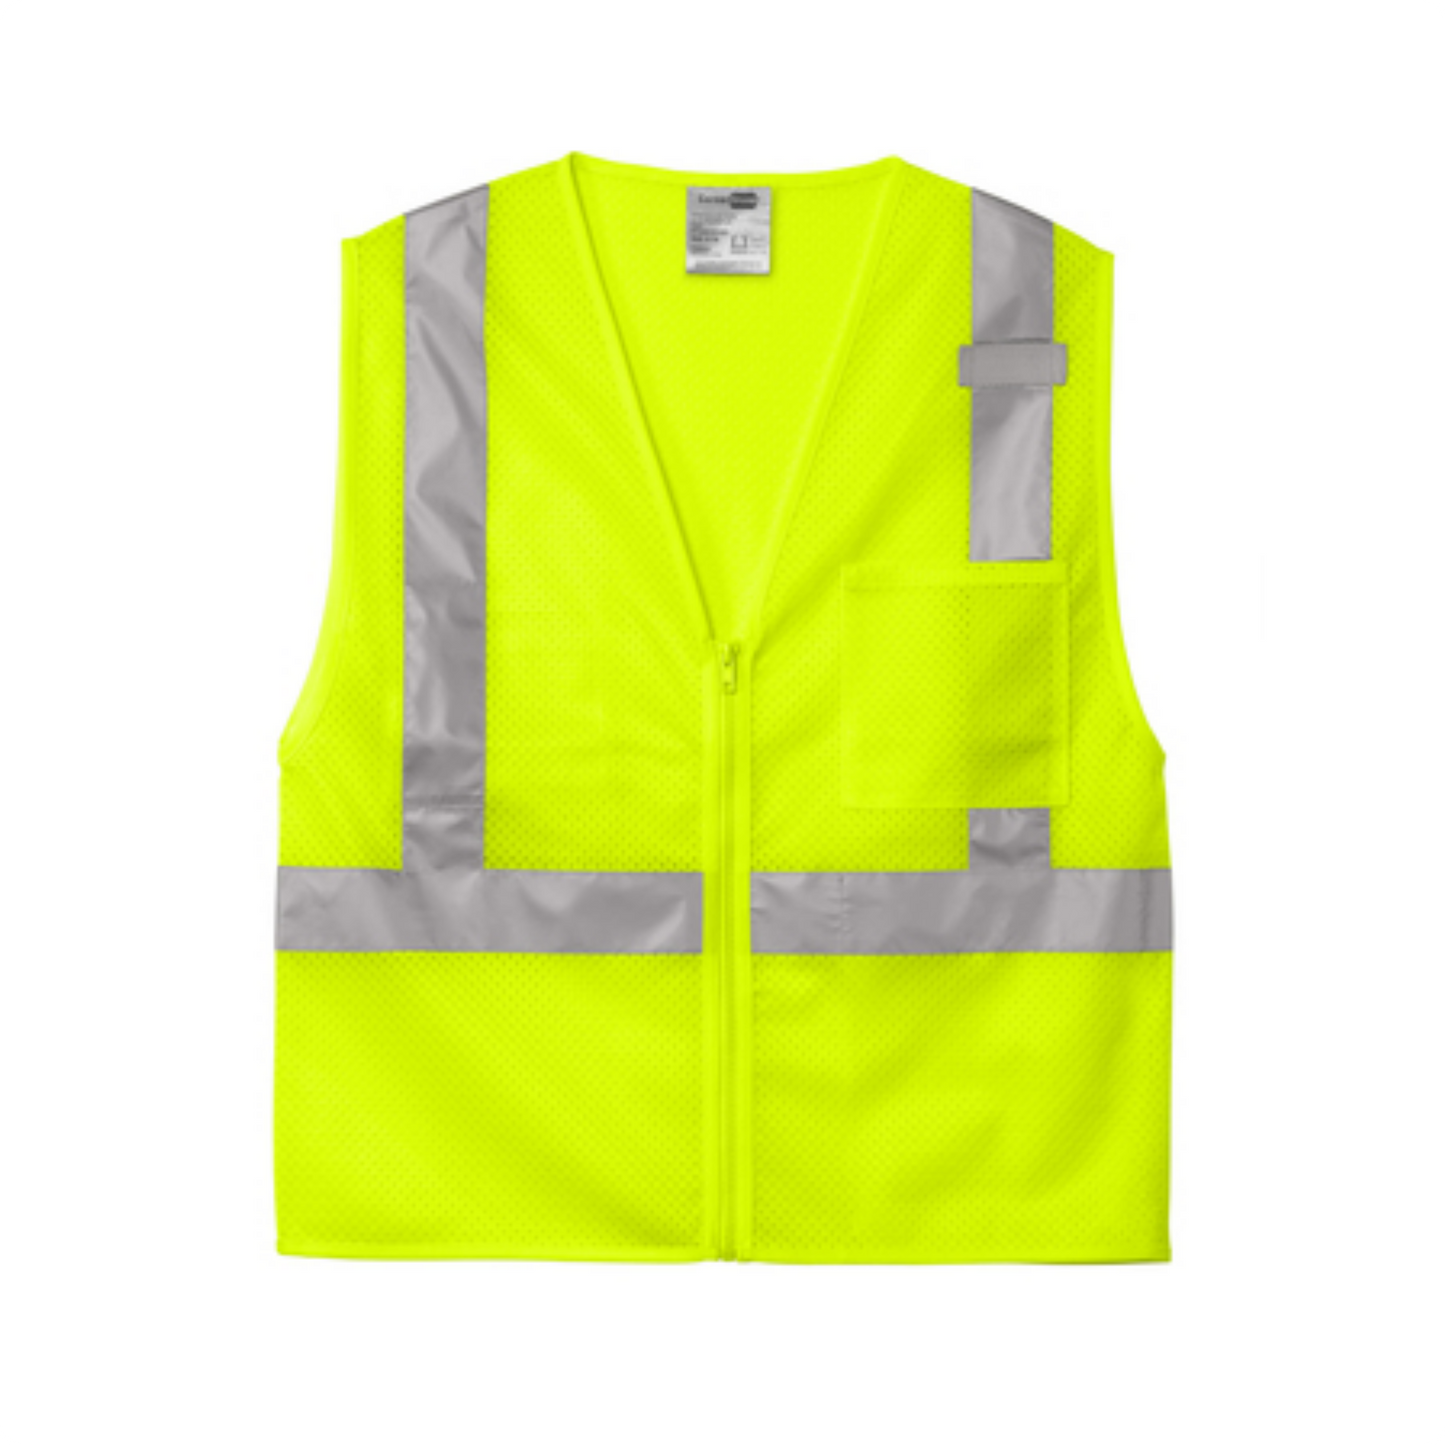 CornerStone® ANSI 107 Class 2 Mesh Zippered Vest